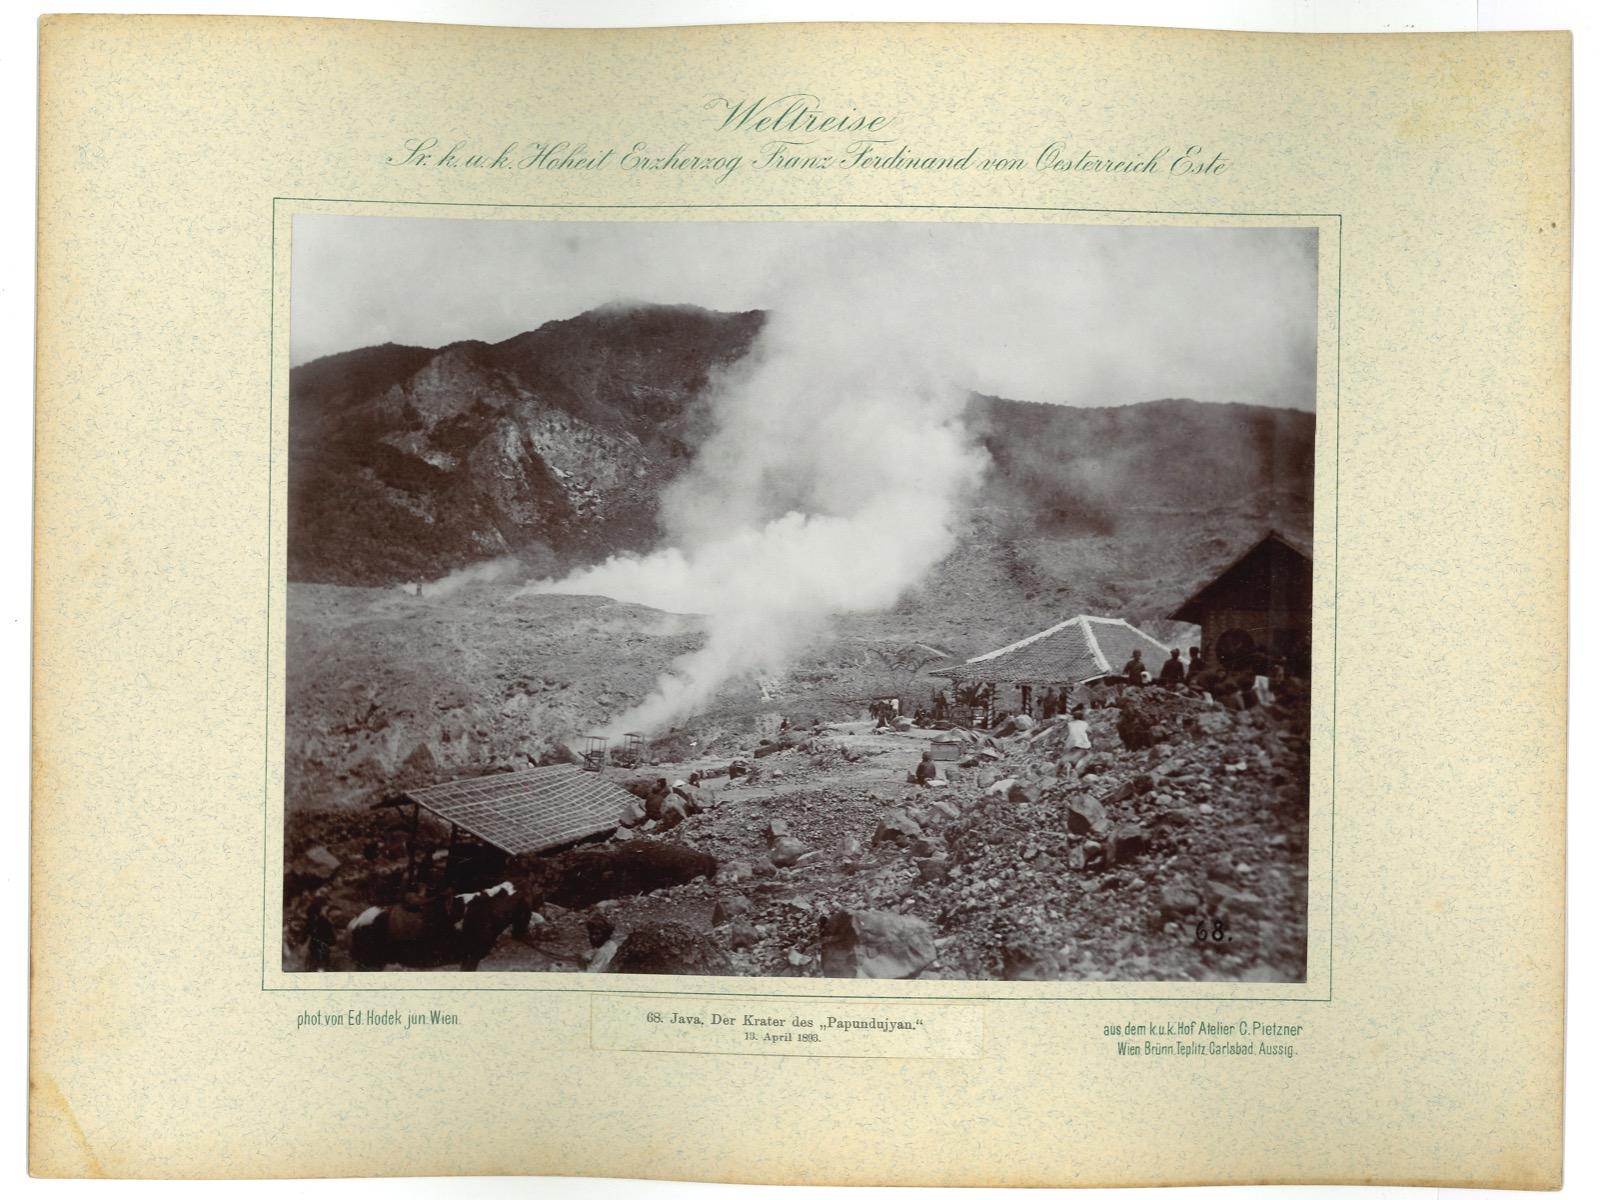 Unknown Landscape Photograph - Java, The Papundujyan crater - Original Vintage Photo - 1893